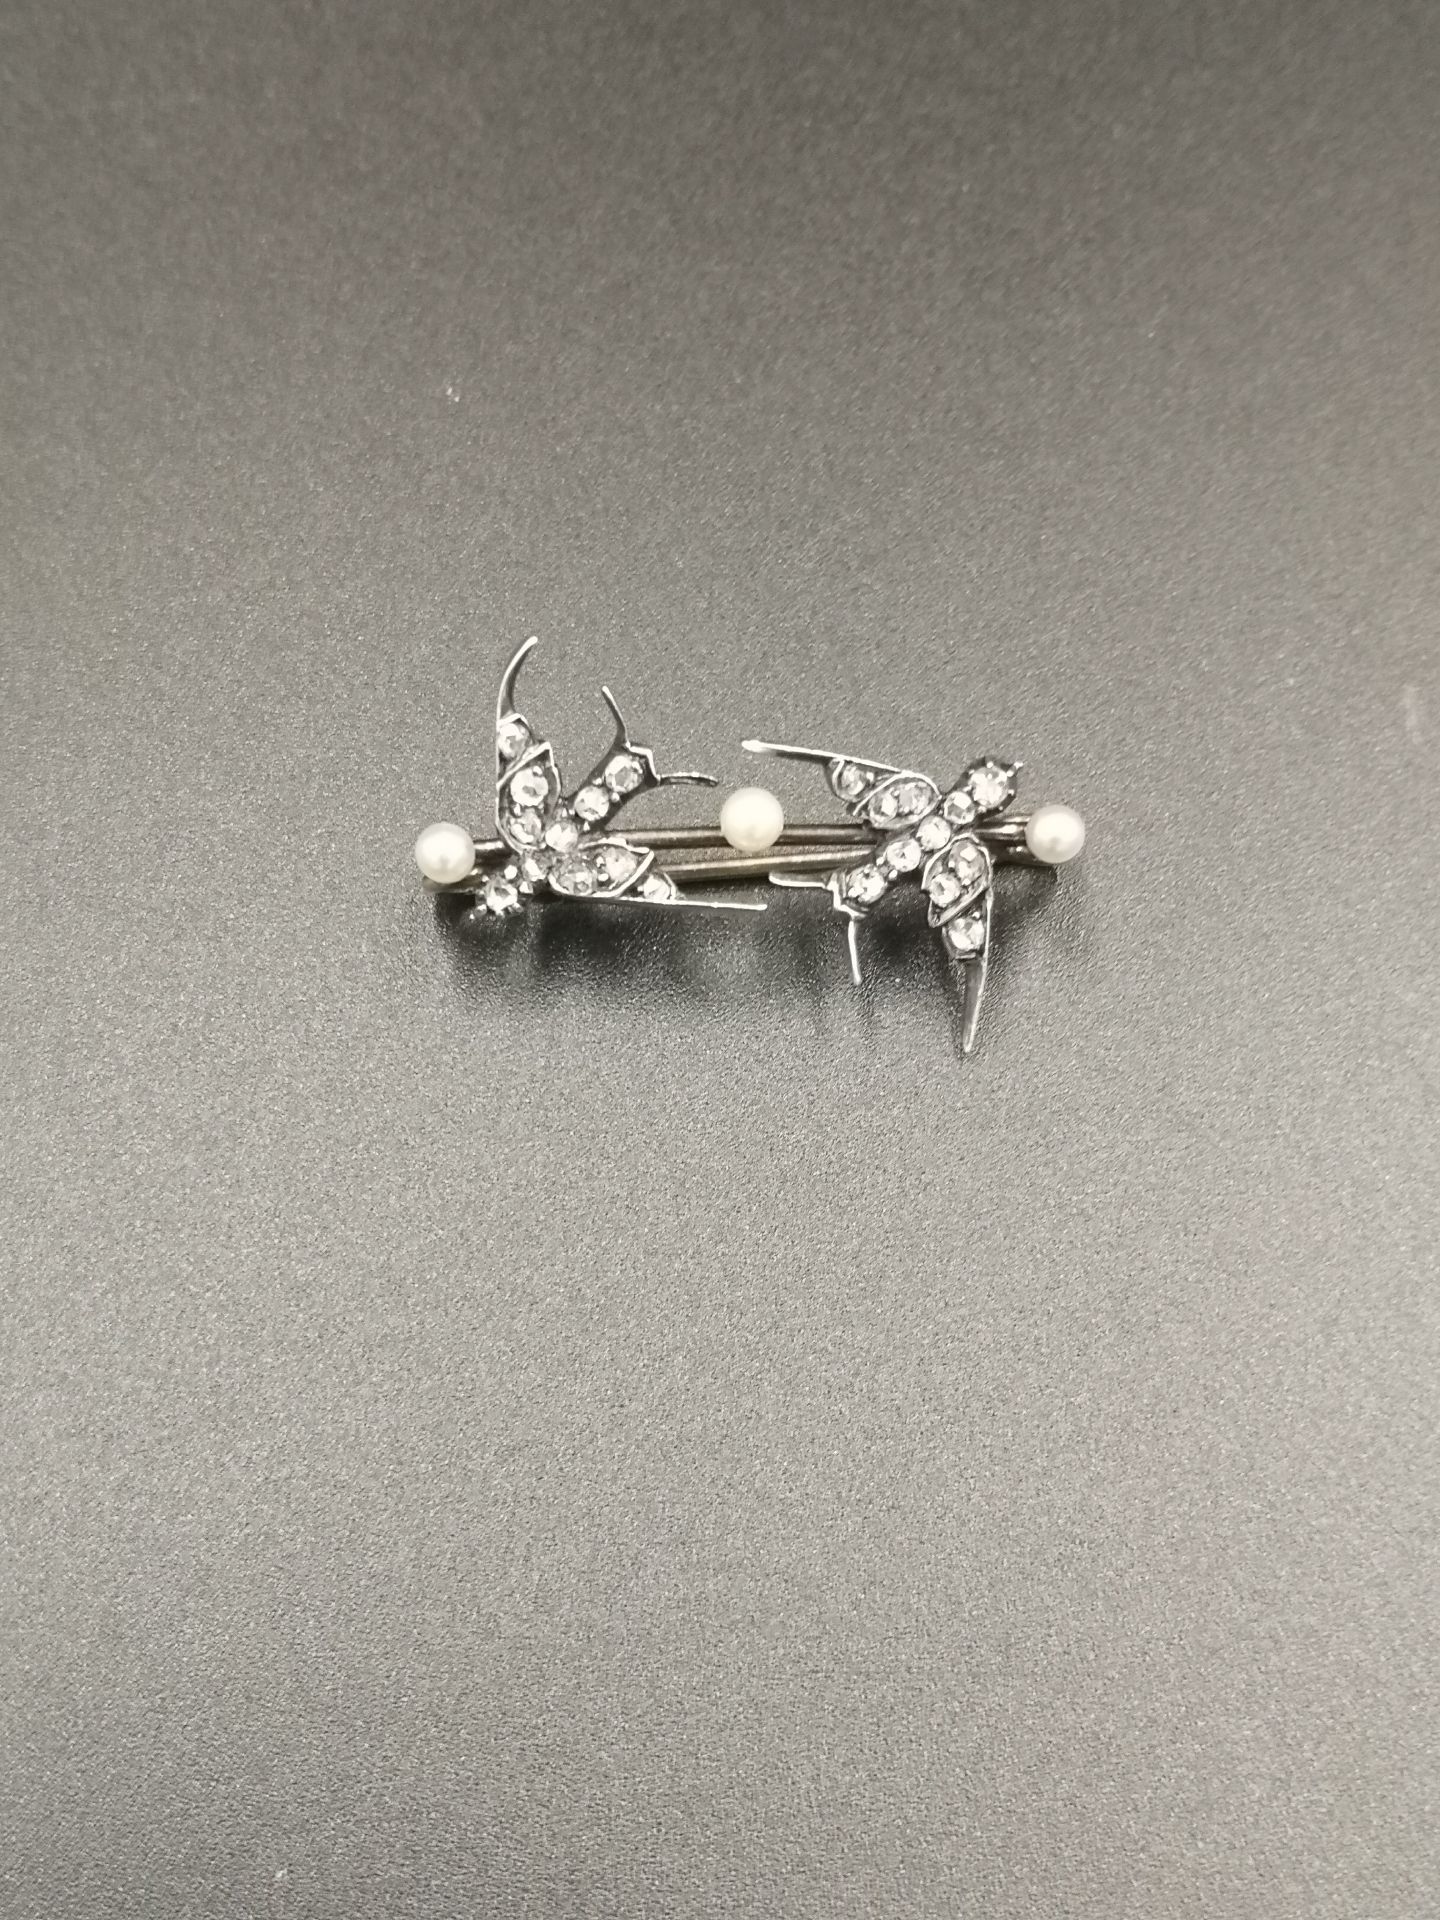 White metal brooch set with diamonds